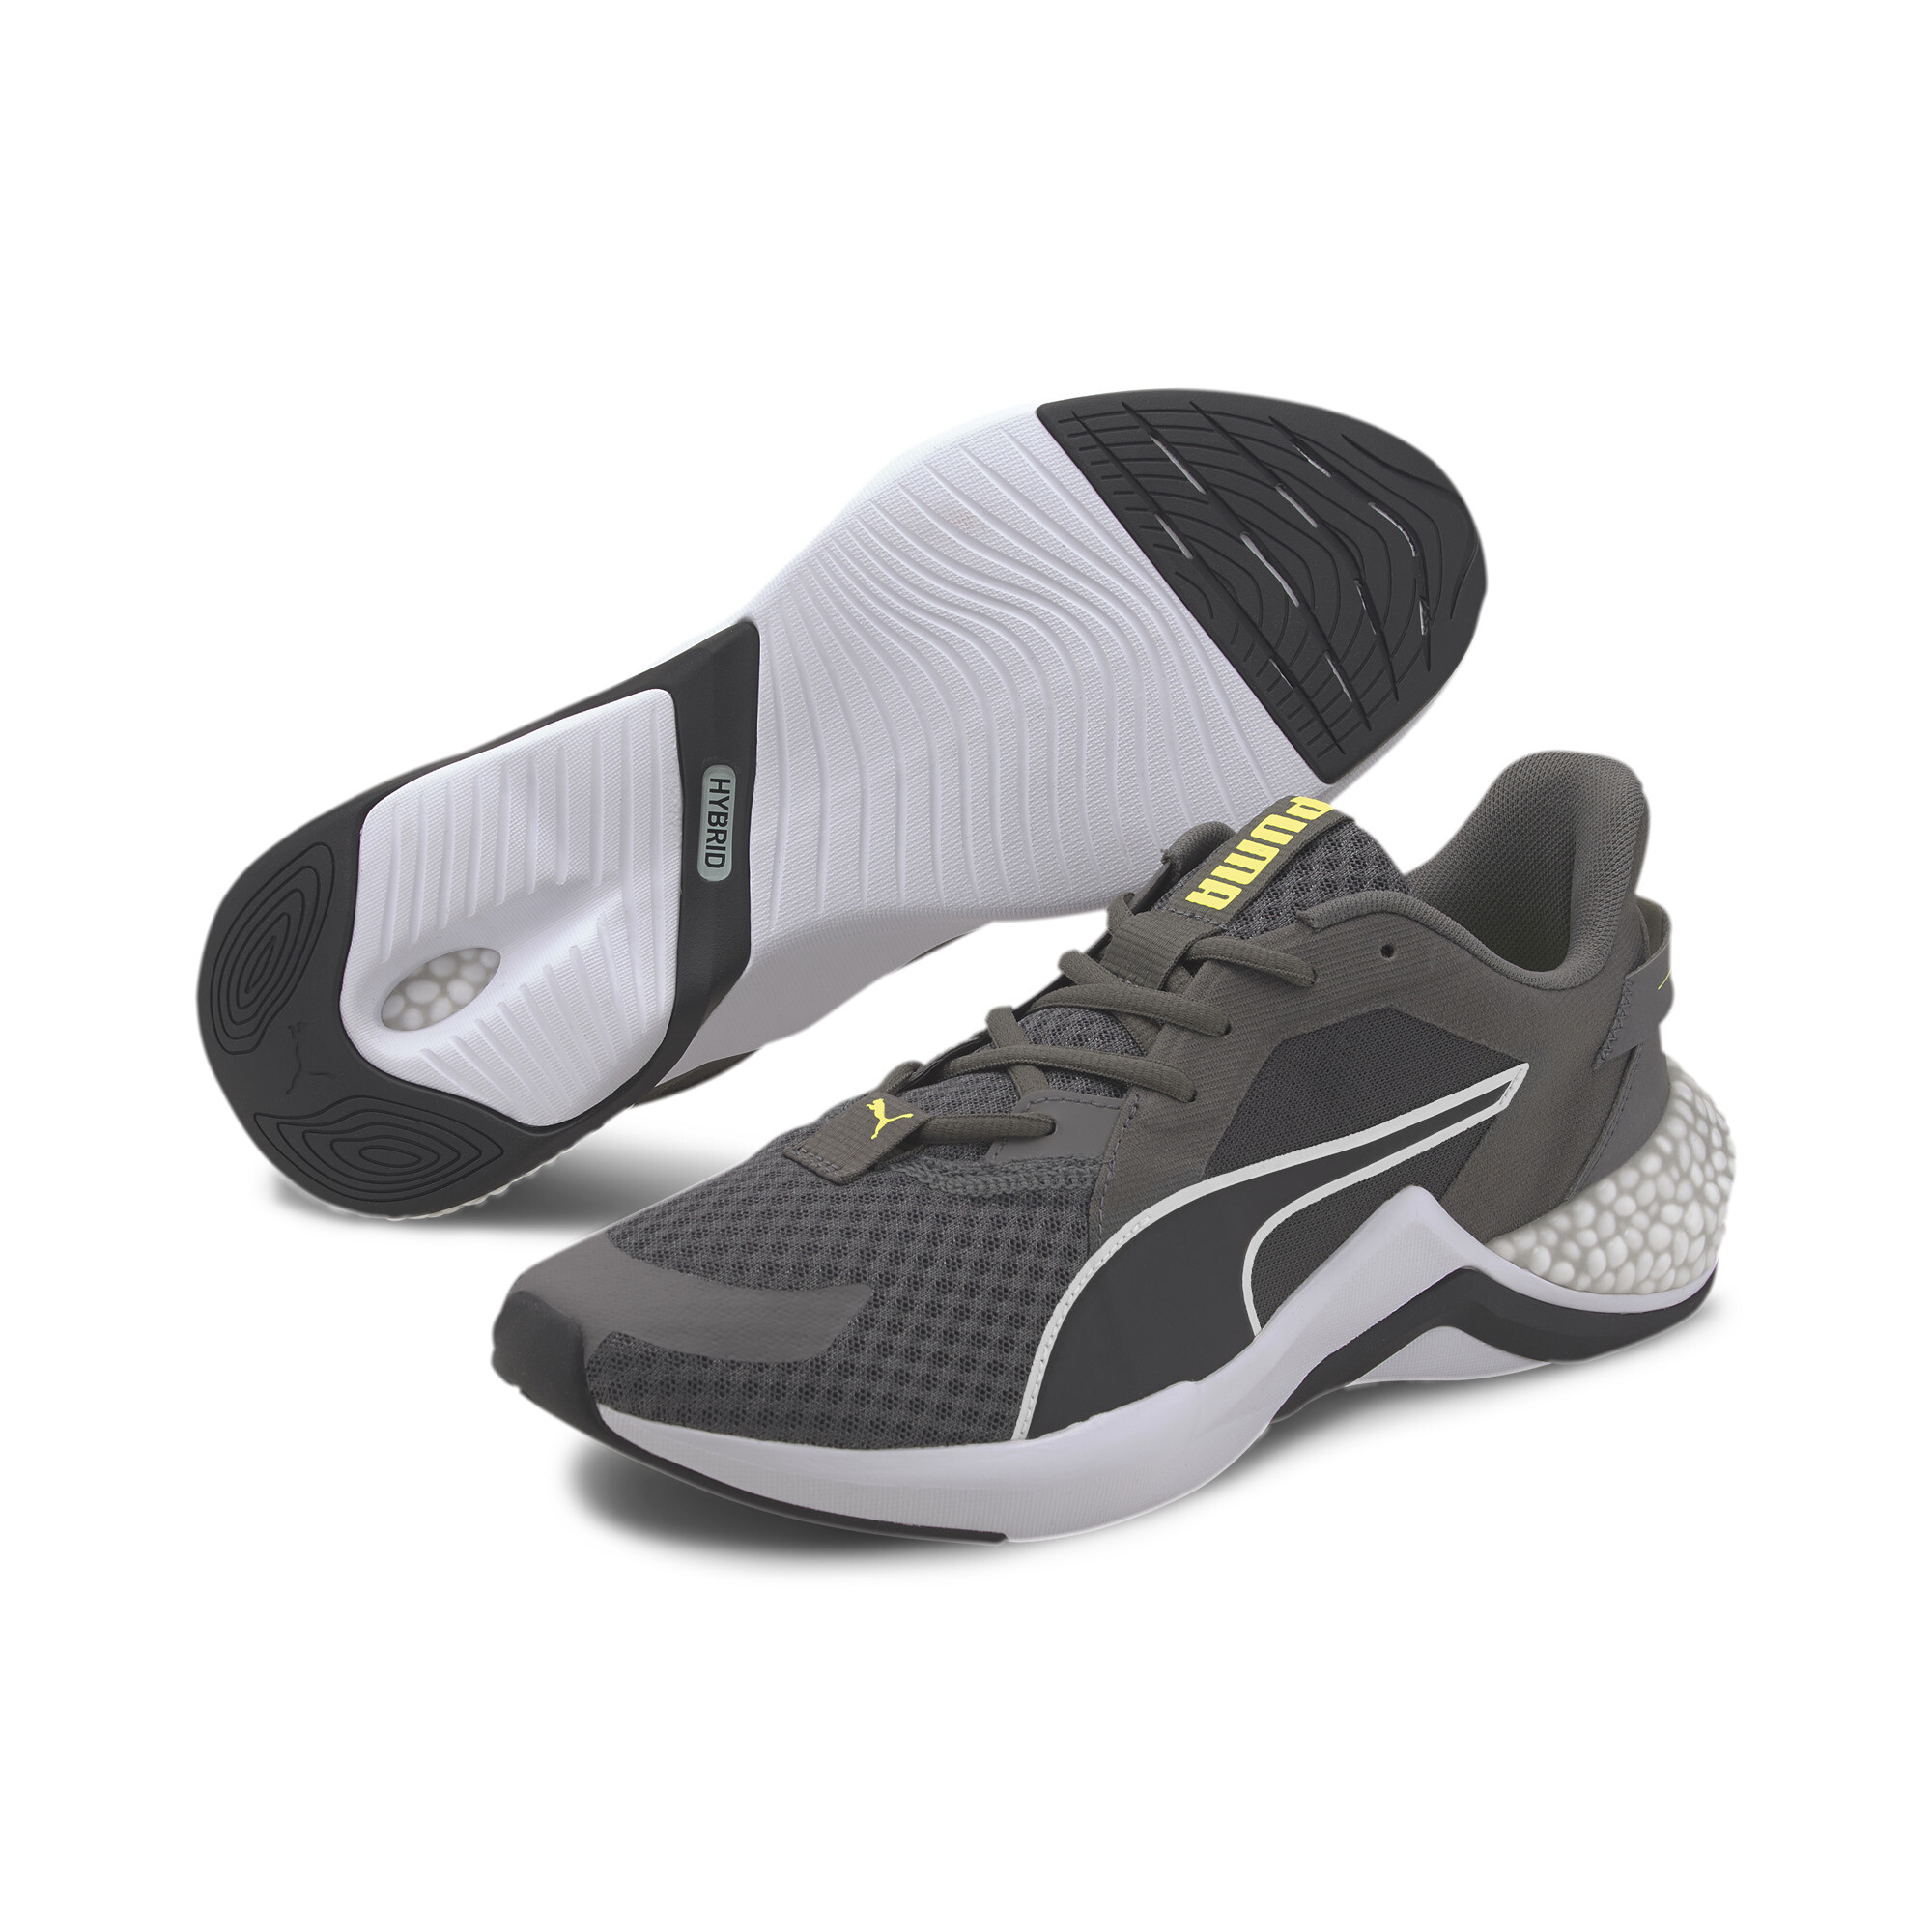 PUMA MEN'S HYBRID NX Ozone Running Shoes $44.99 - PicClick